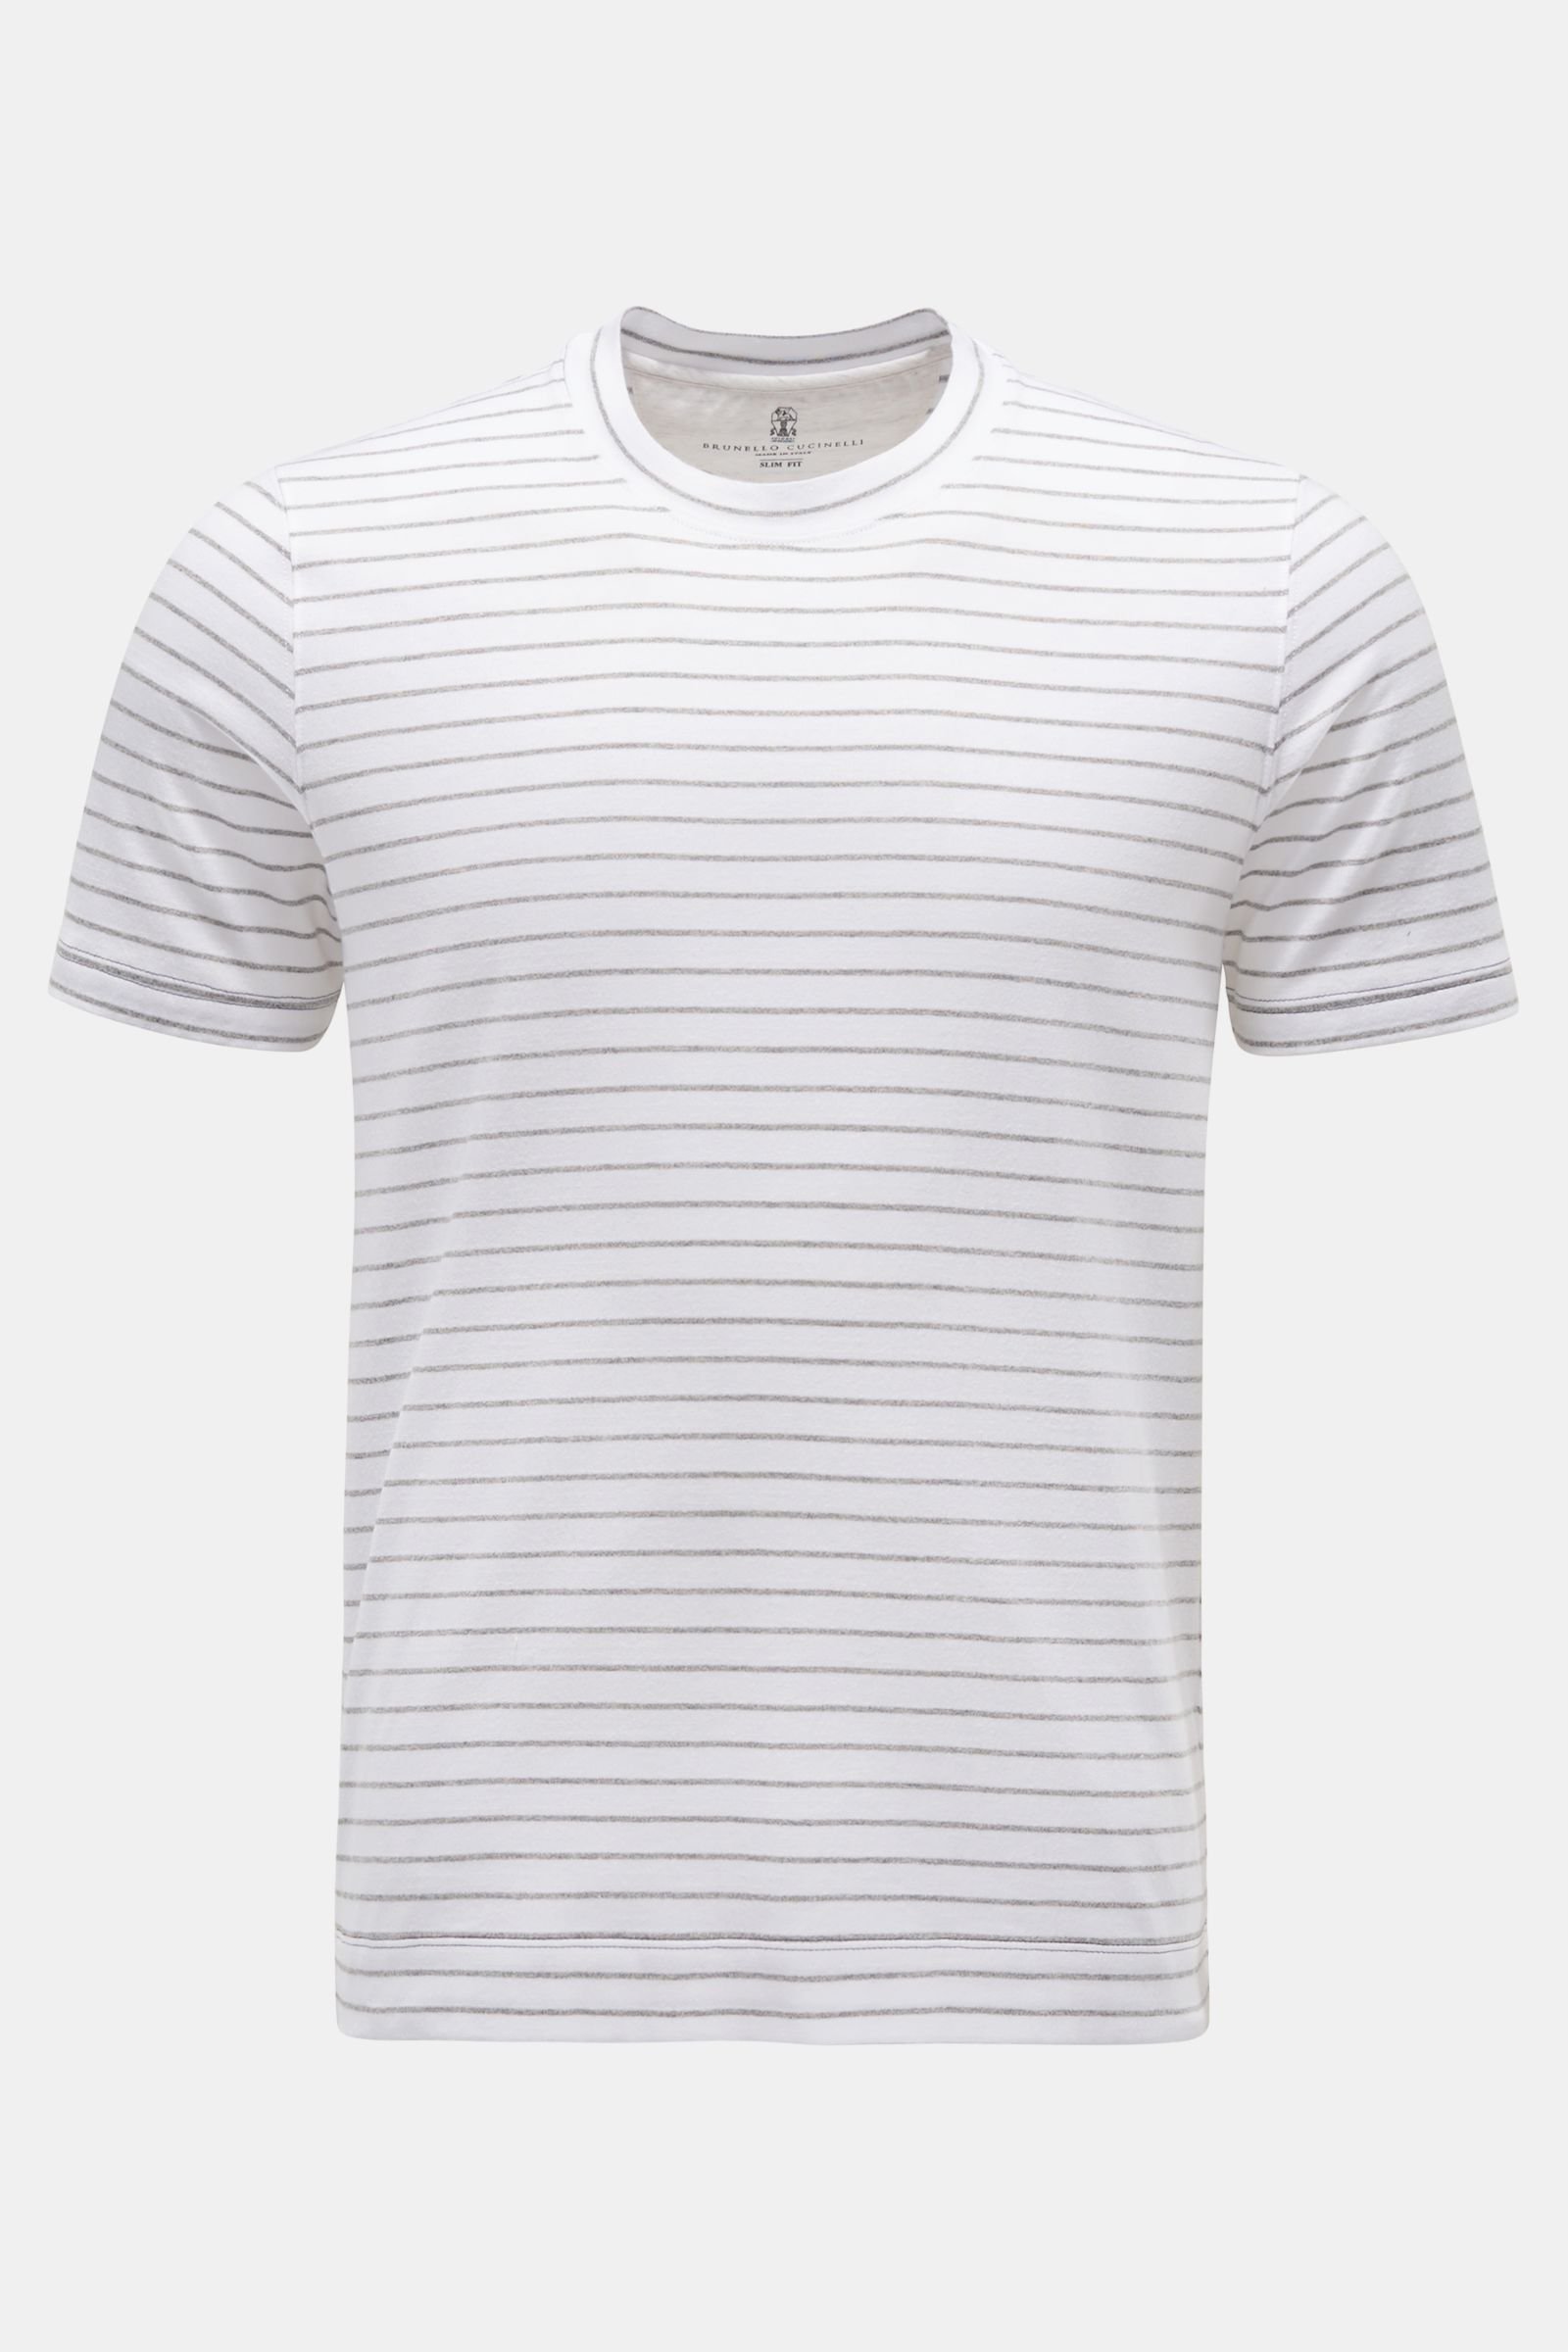 Crew neck T-shirt grey/white striped